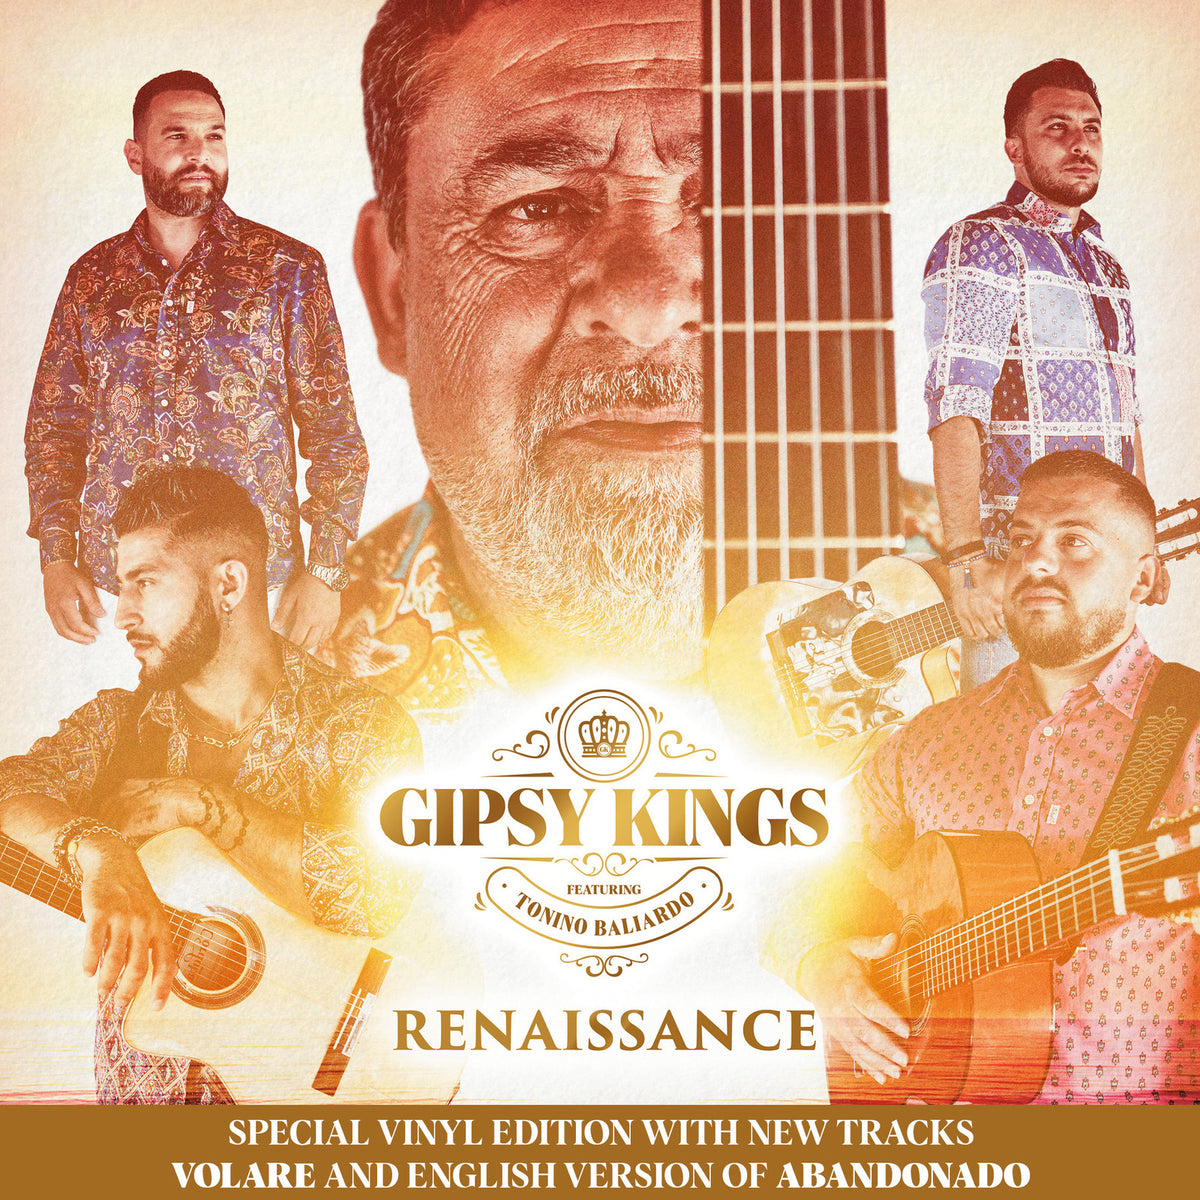 Gipsy Kings featuring Tonino Baliardo - Renaissance - WNRLP5124